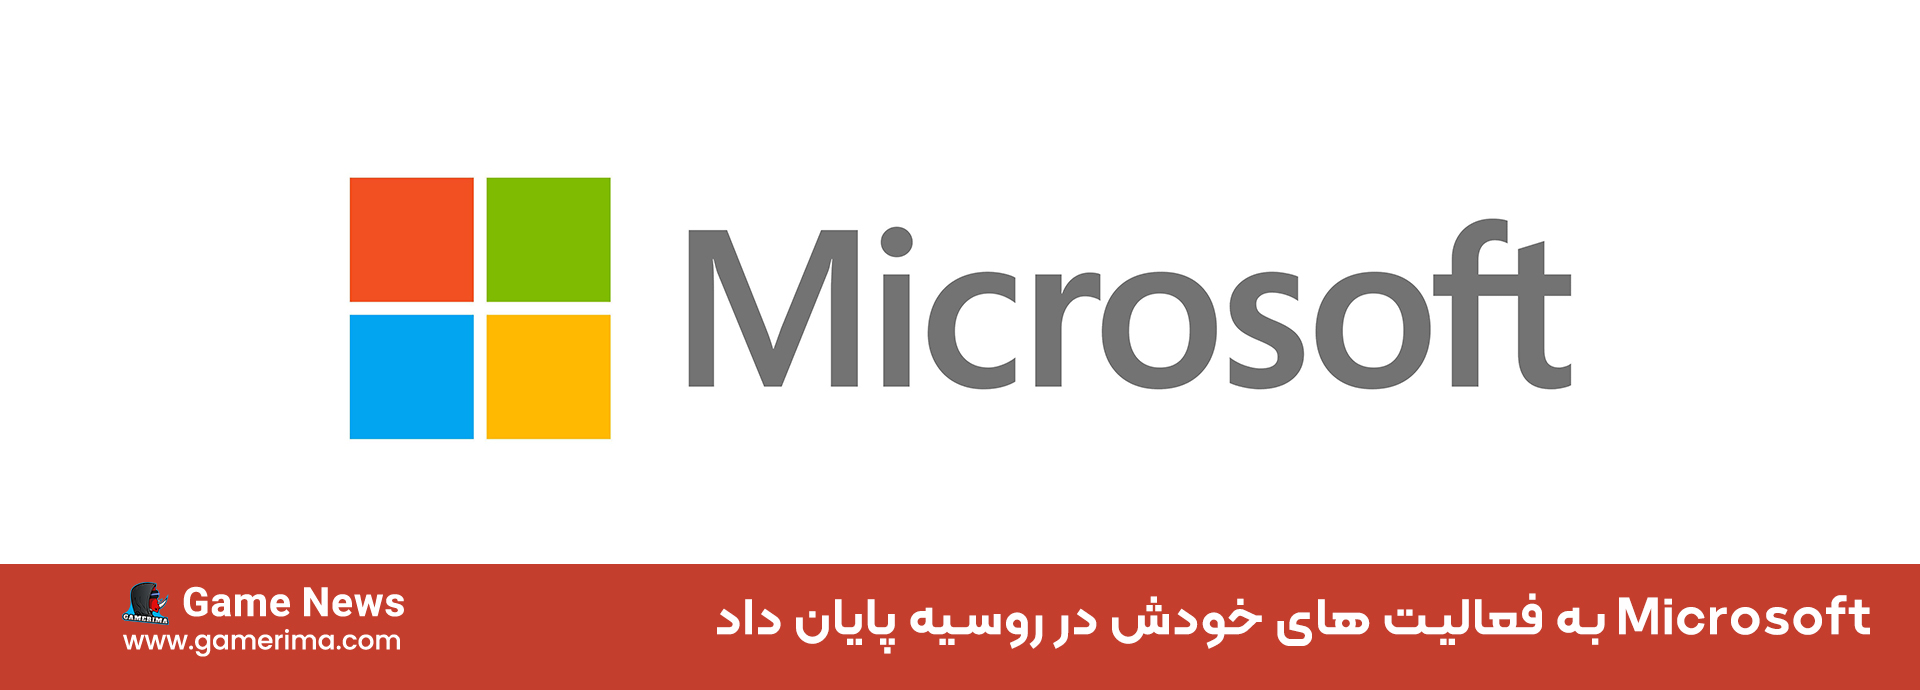 Microsoft به فعالیت های خودش در روسیه پایان داد